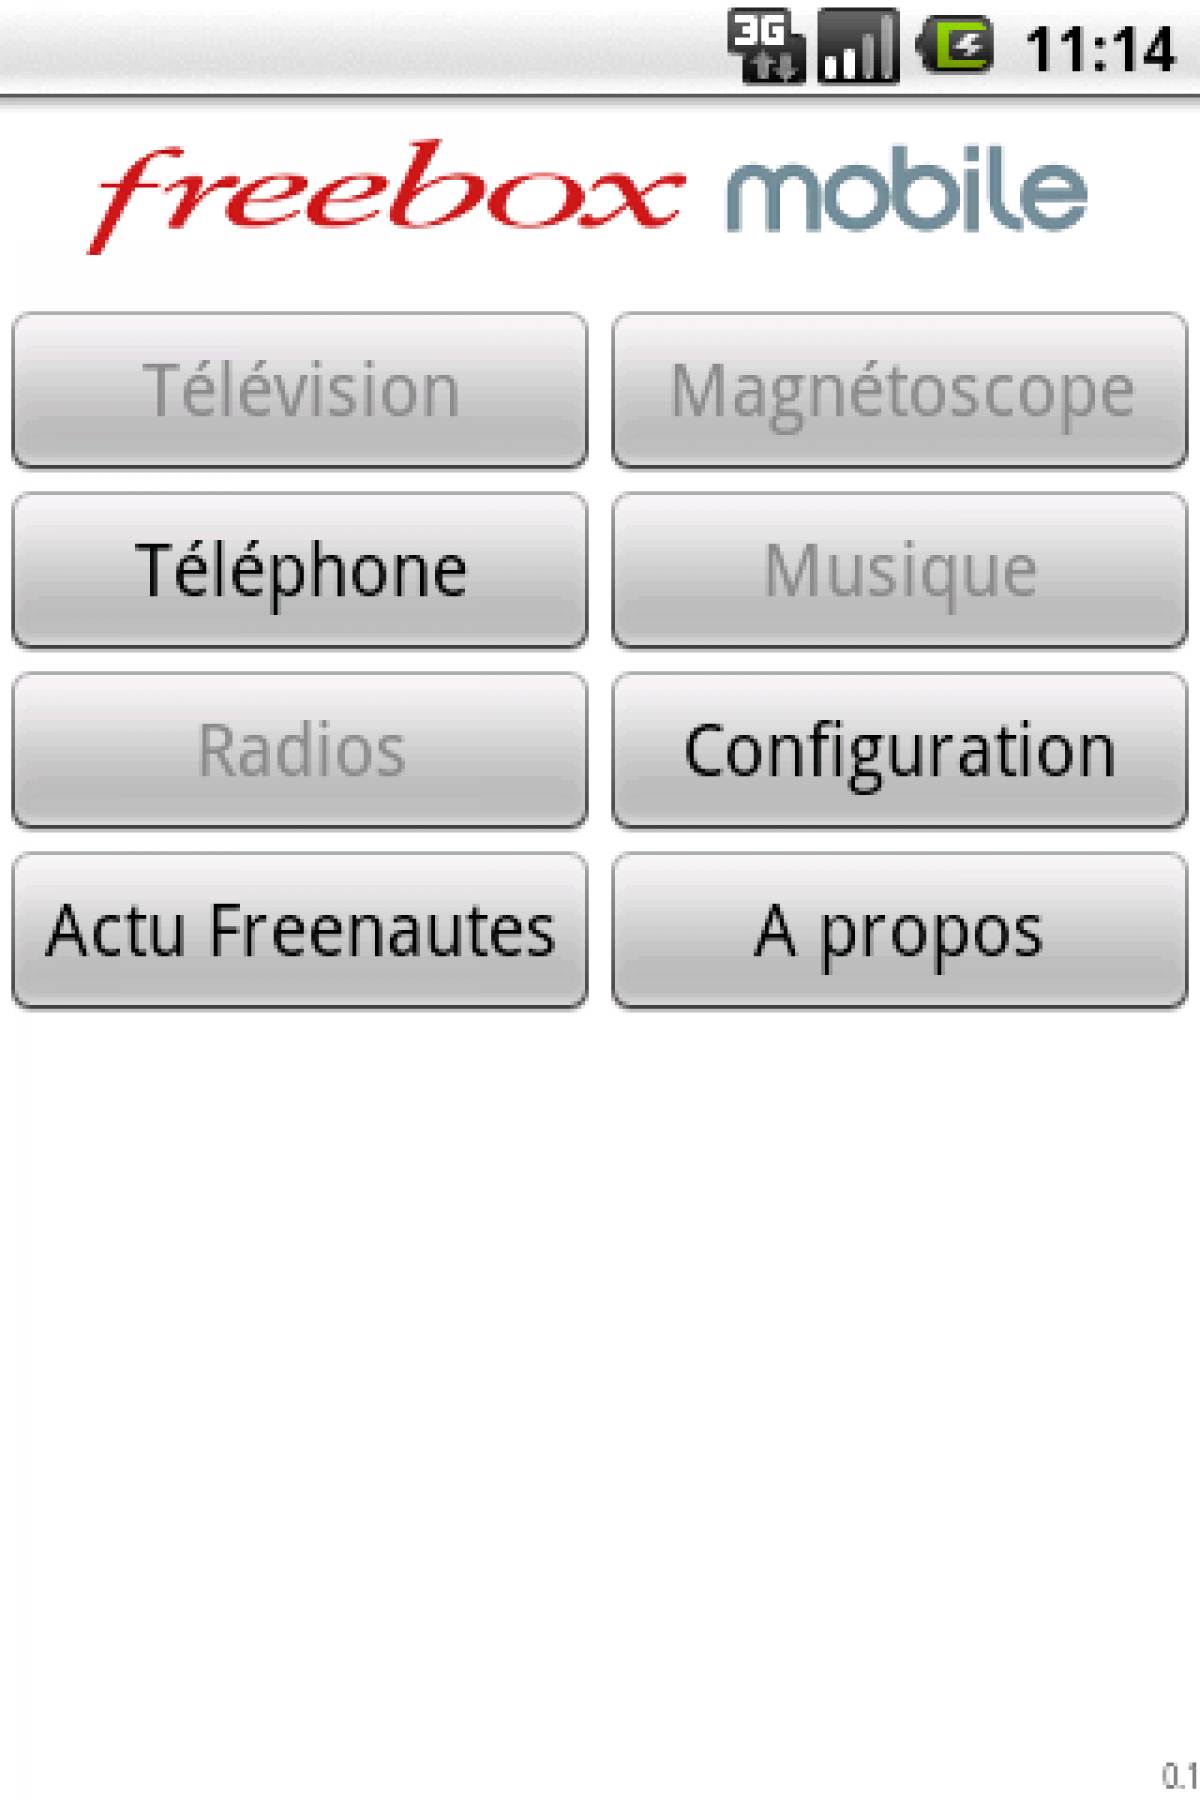 Freebox Mobile : Tous les services Freebox accessibles sous Android